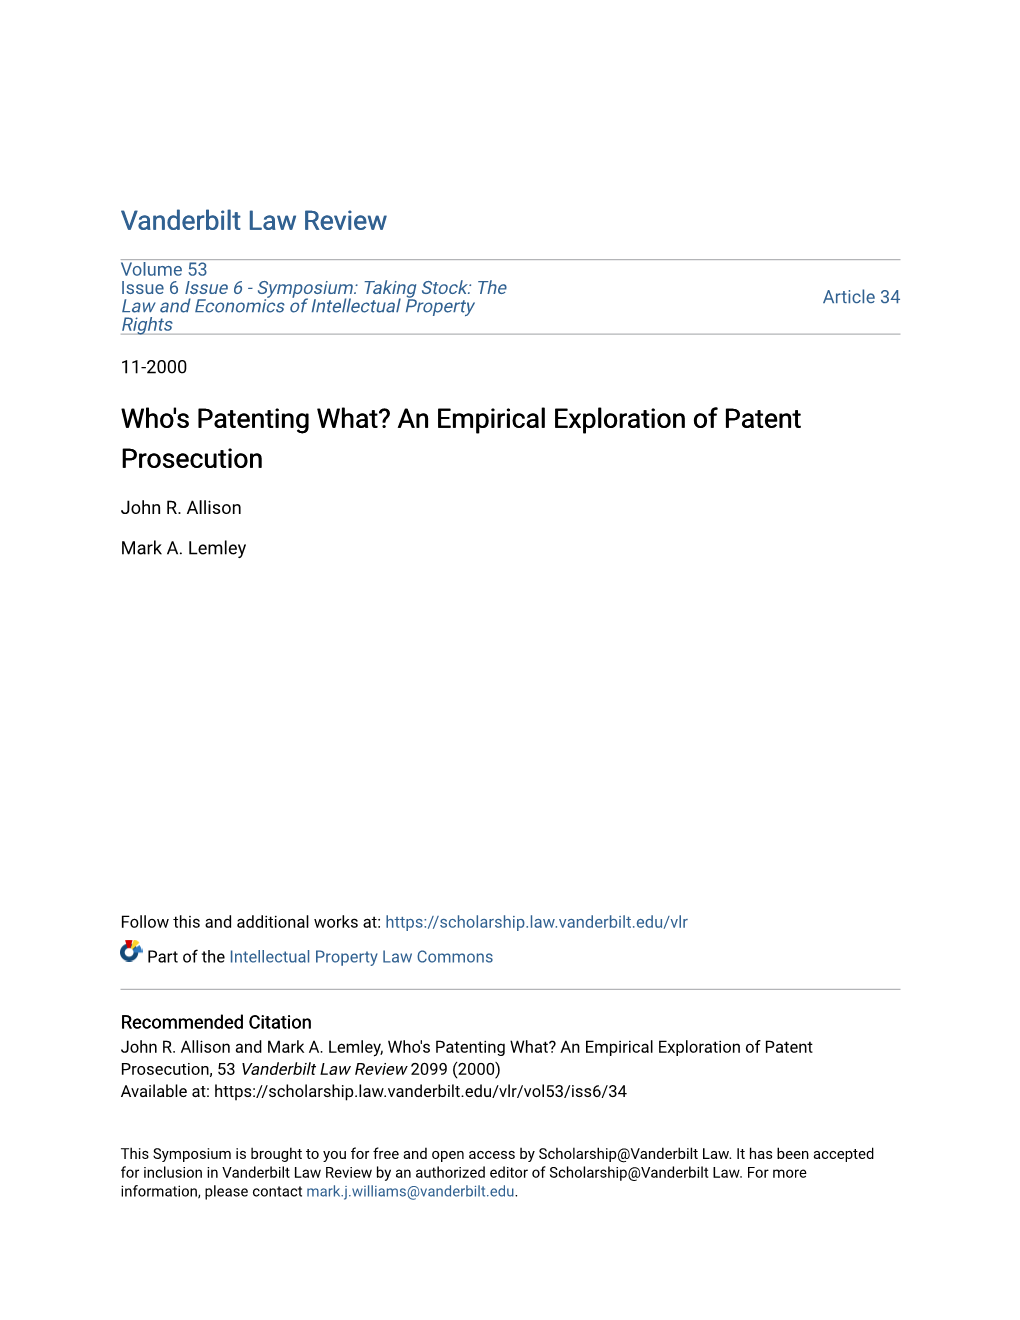 An Empirical Exploration of Patent Prosecution